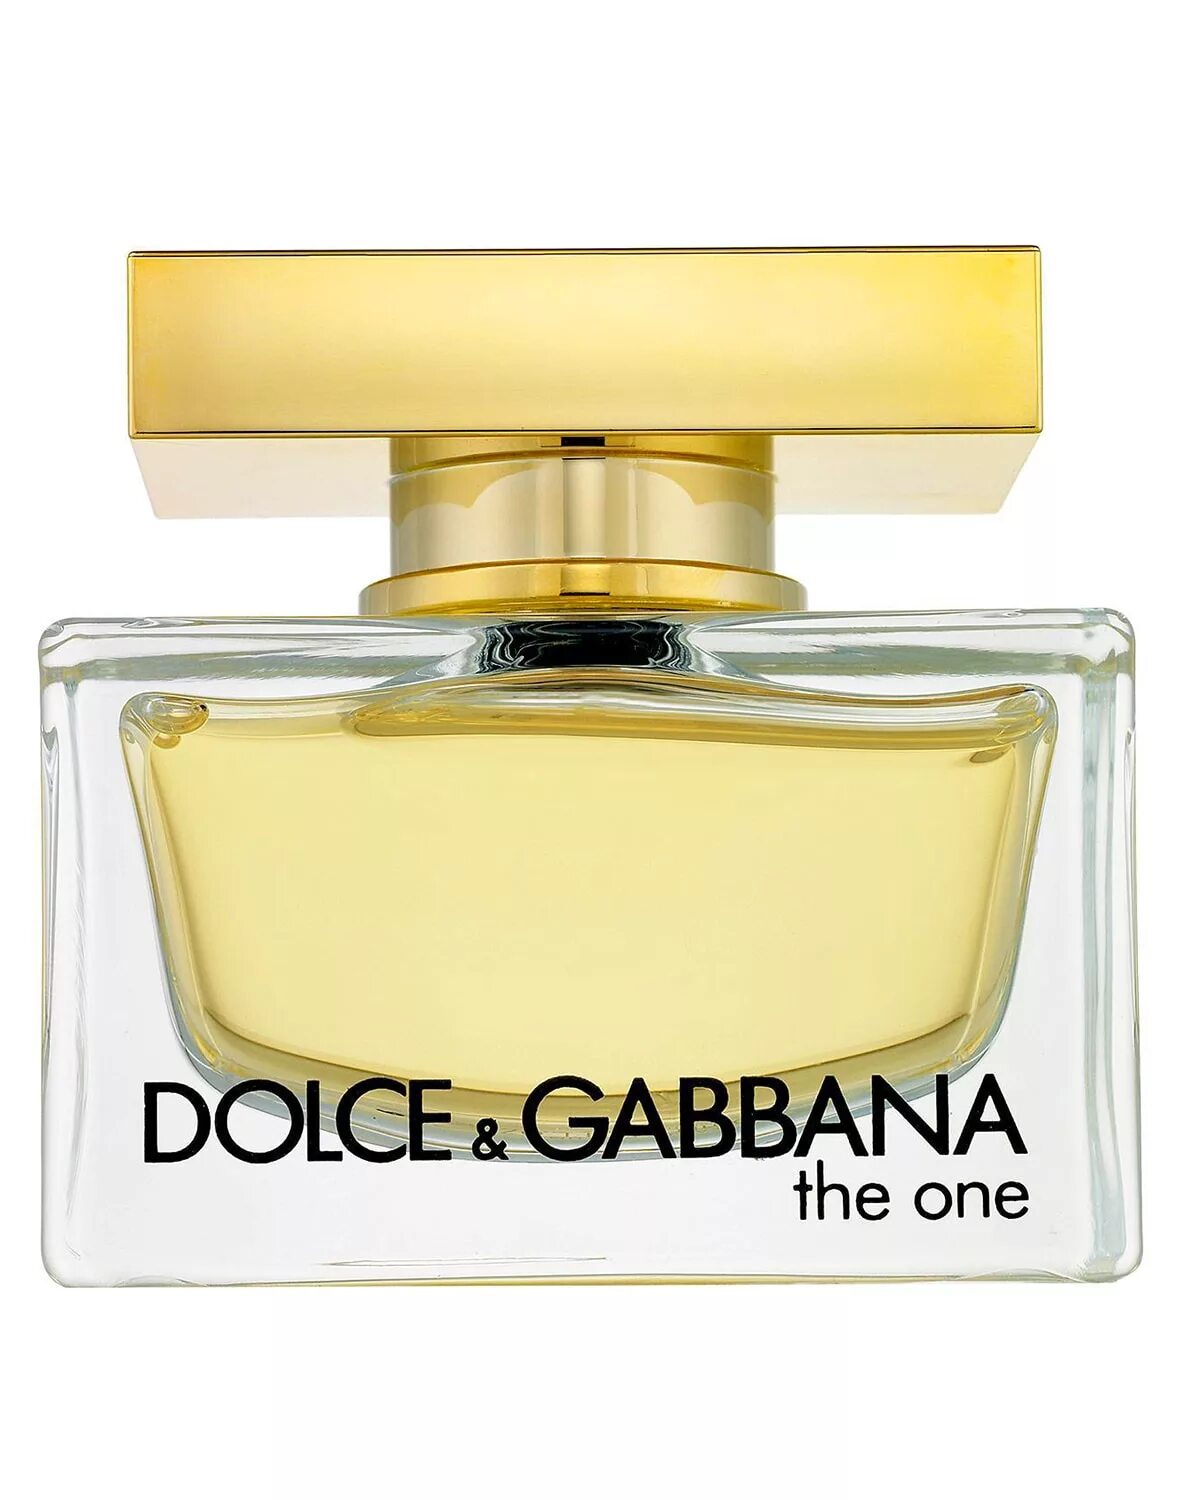 Дольче габбана ван отзывы. Духи лольче габано Зевар. Dolce & Gabbana the one women EDP, 75 ml. Dolce Gabbana the one 50ml. Dolce Gabbana the one 75 ml.